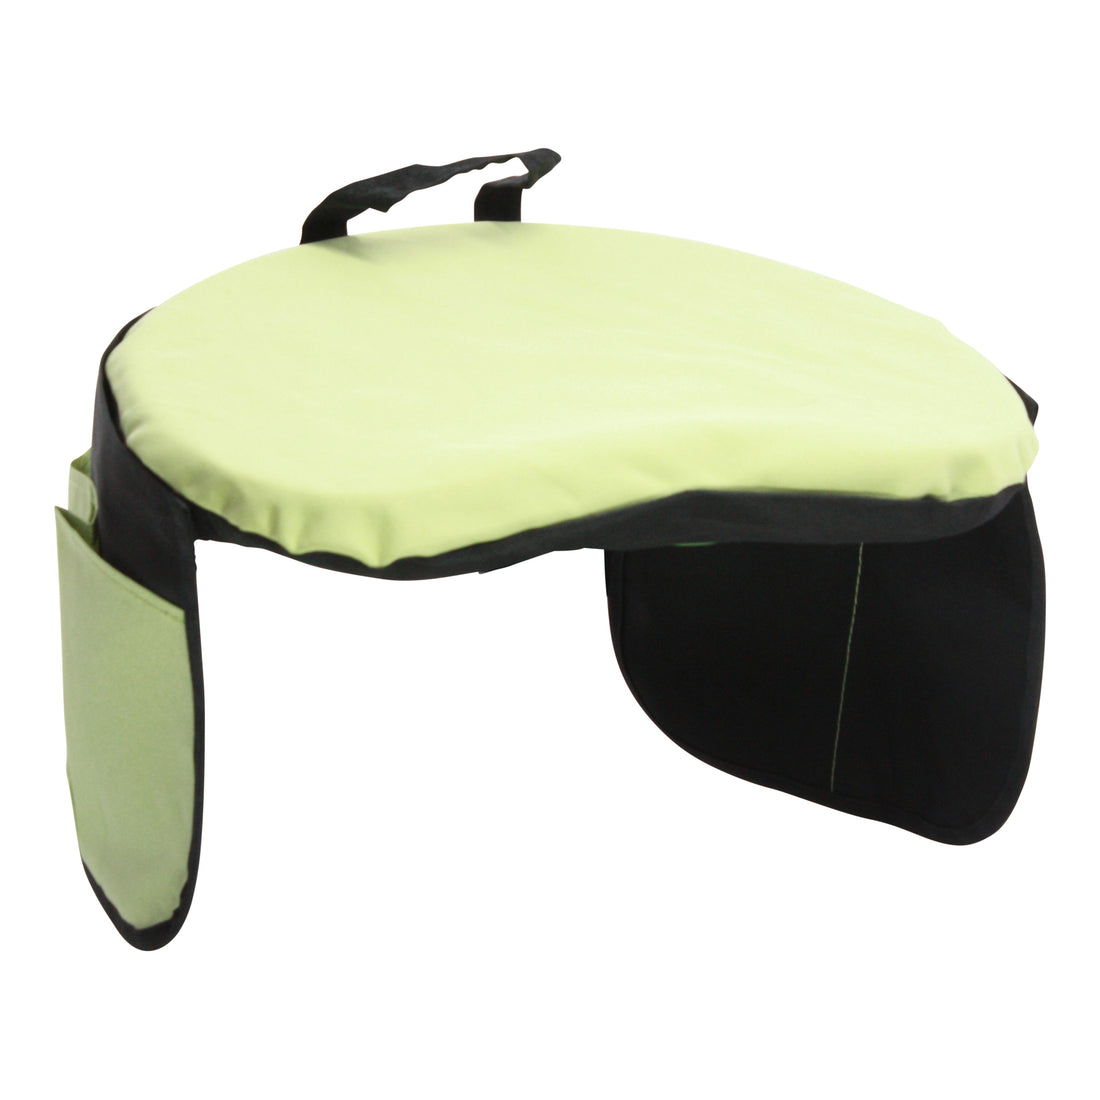 Tool Toter™ Comfy Cushion™